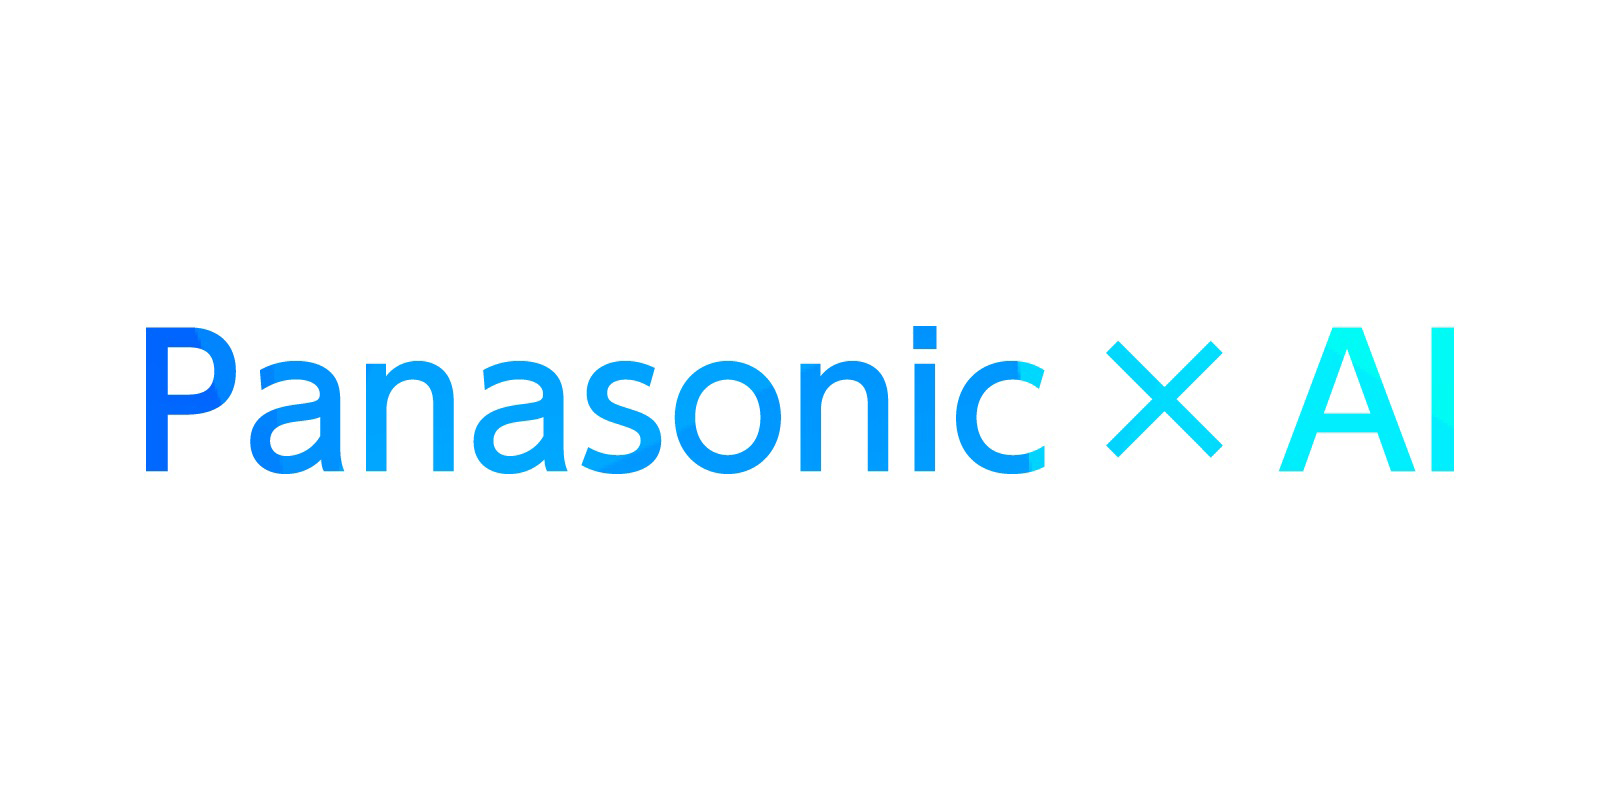 image:panasonic x AI logo